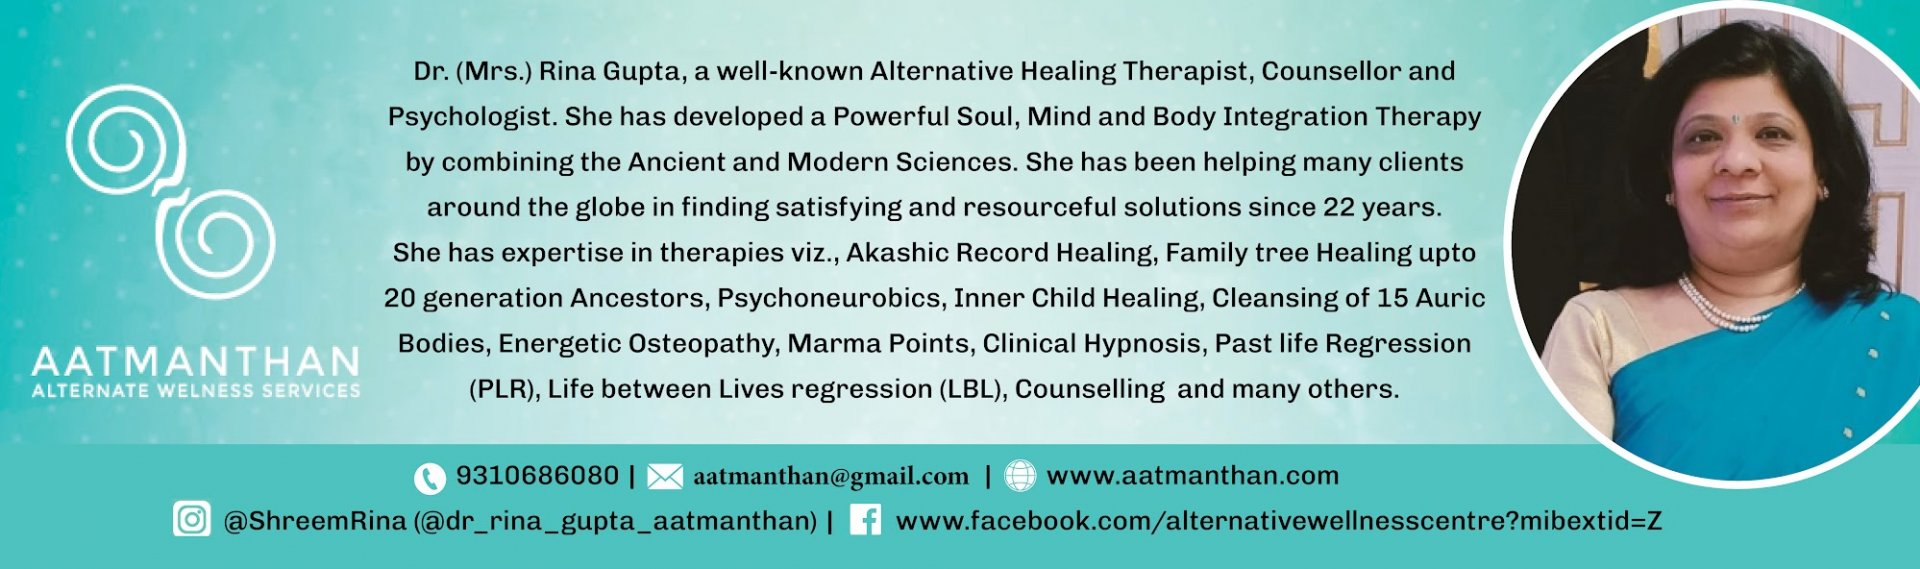 Aatmanthan - Dr. Rina Gupta